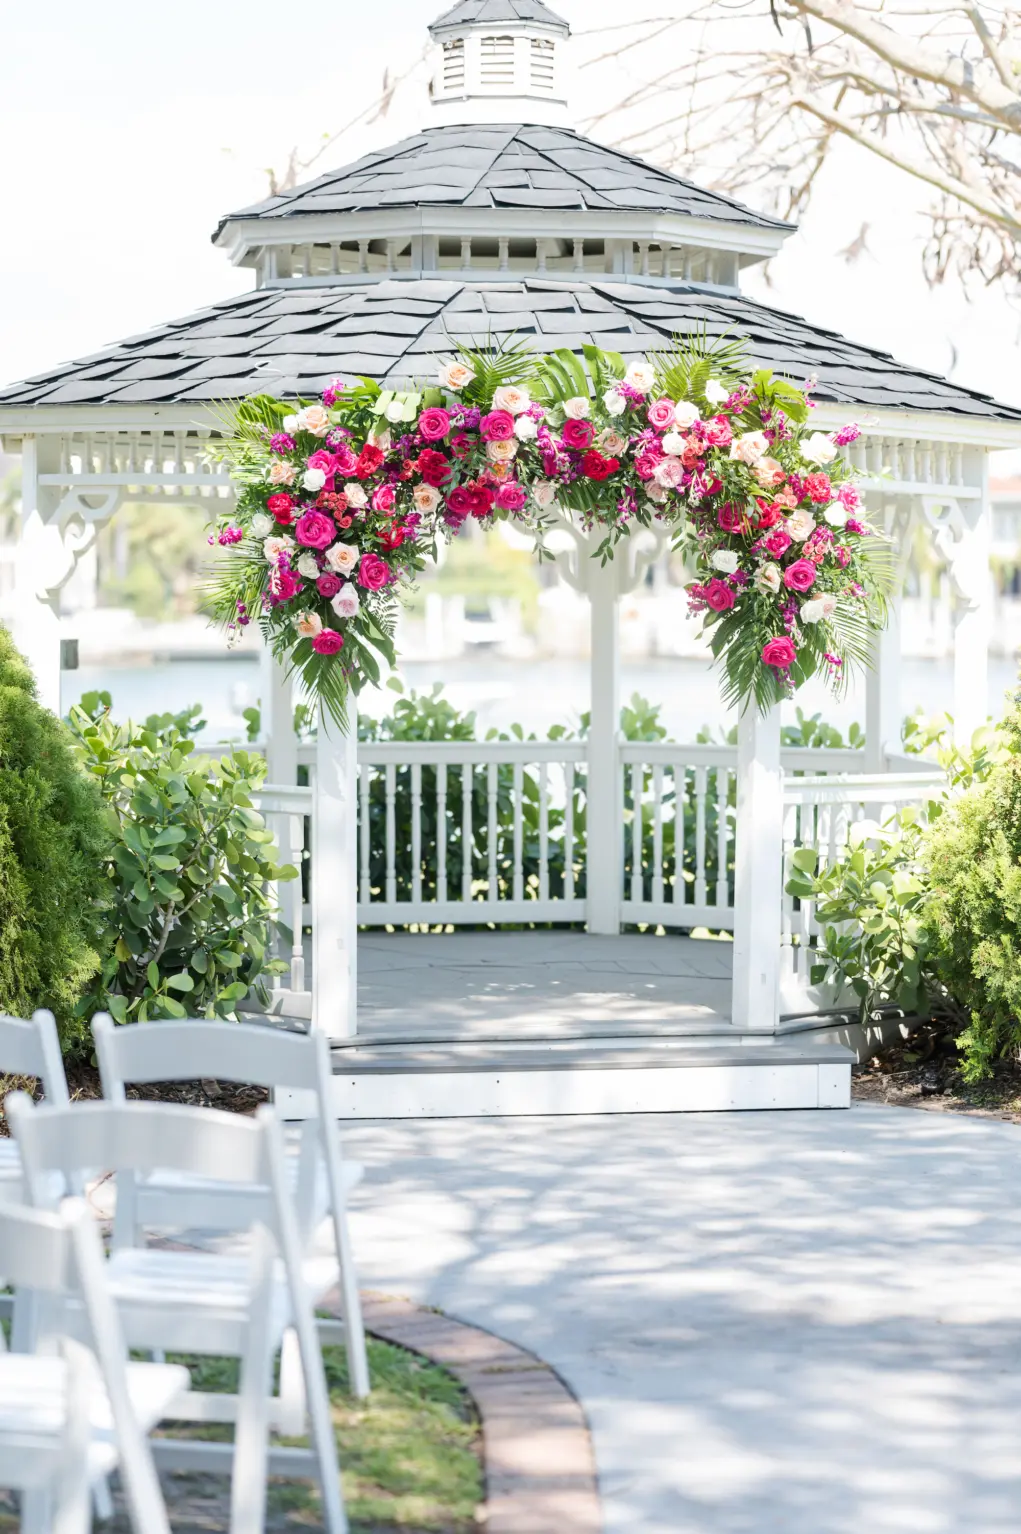 Tropical Pink and White Wedding Ceremony Gazebo Altar Decor Inspiration | Tampa Waterfront Venue Davis Islands Garden Club